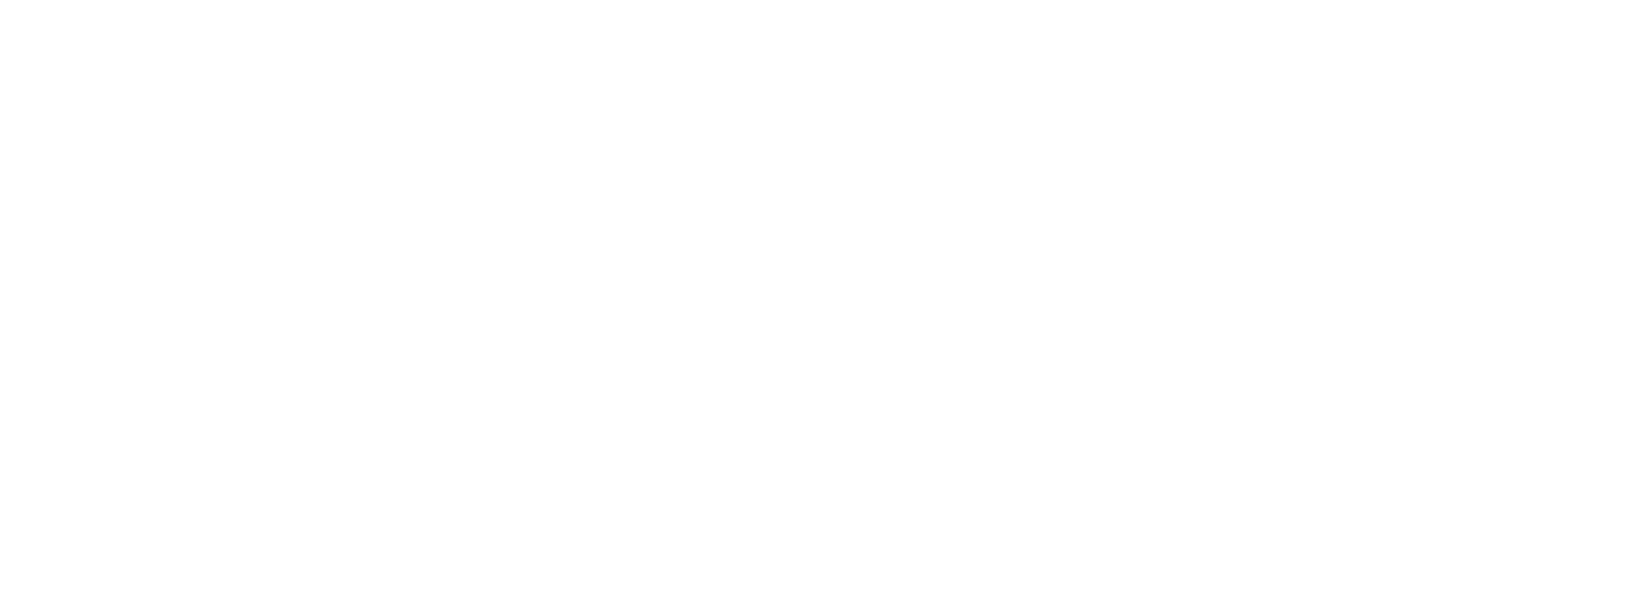 Taylor Study Method